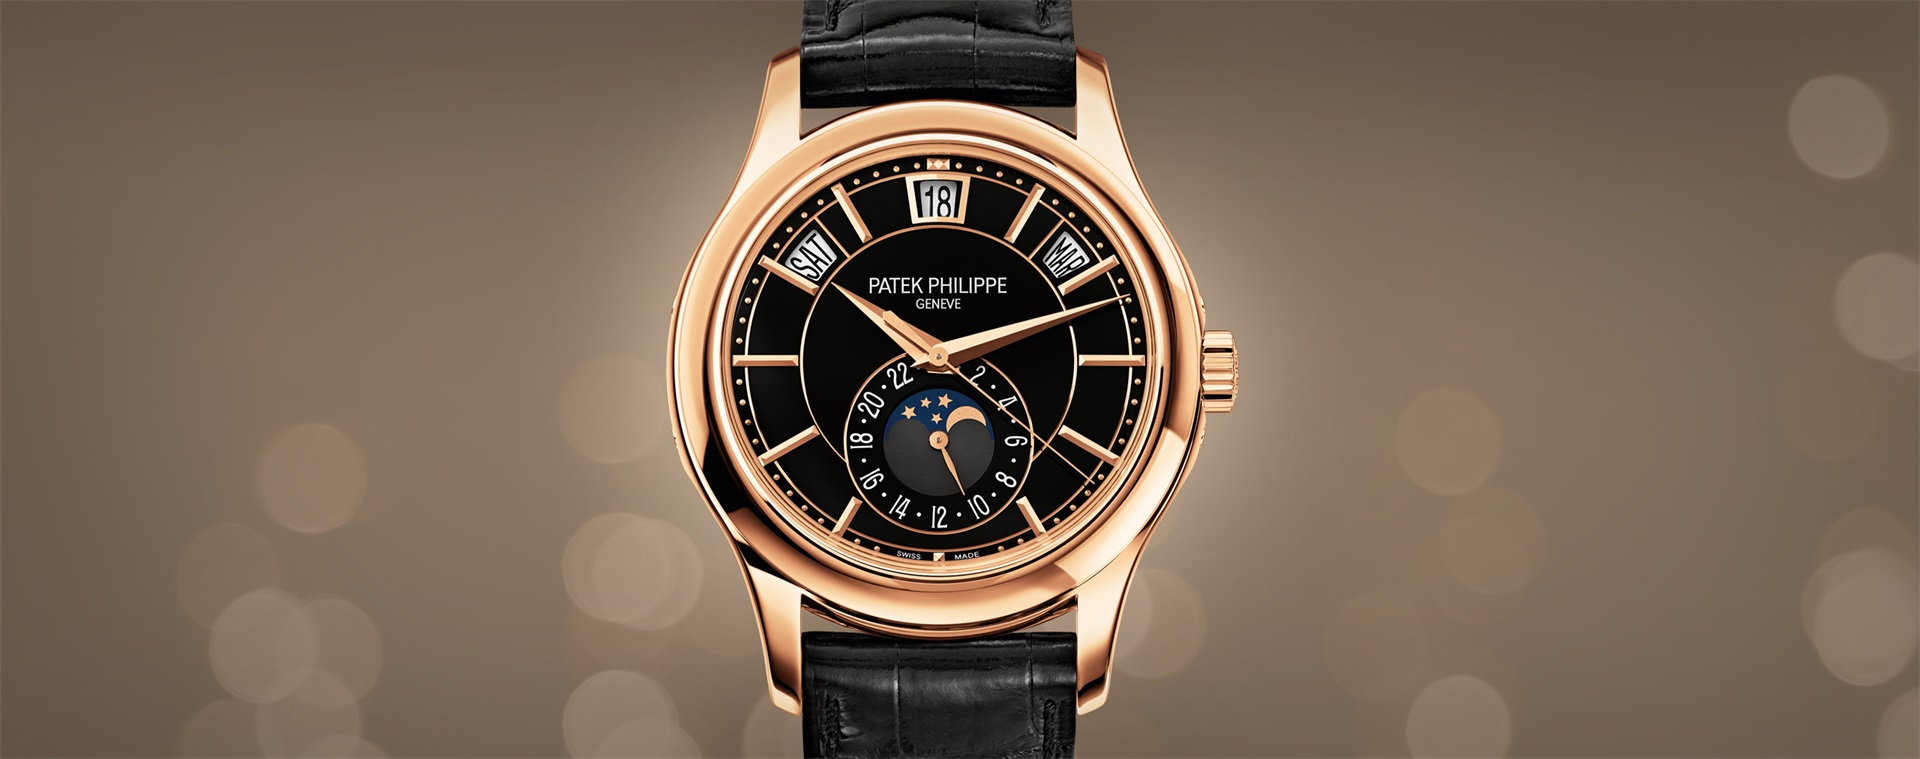 Patek Philippe 18k Gold Watch